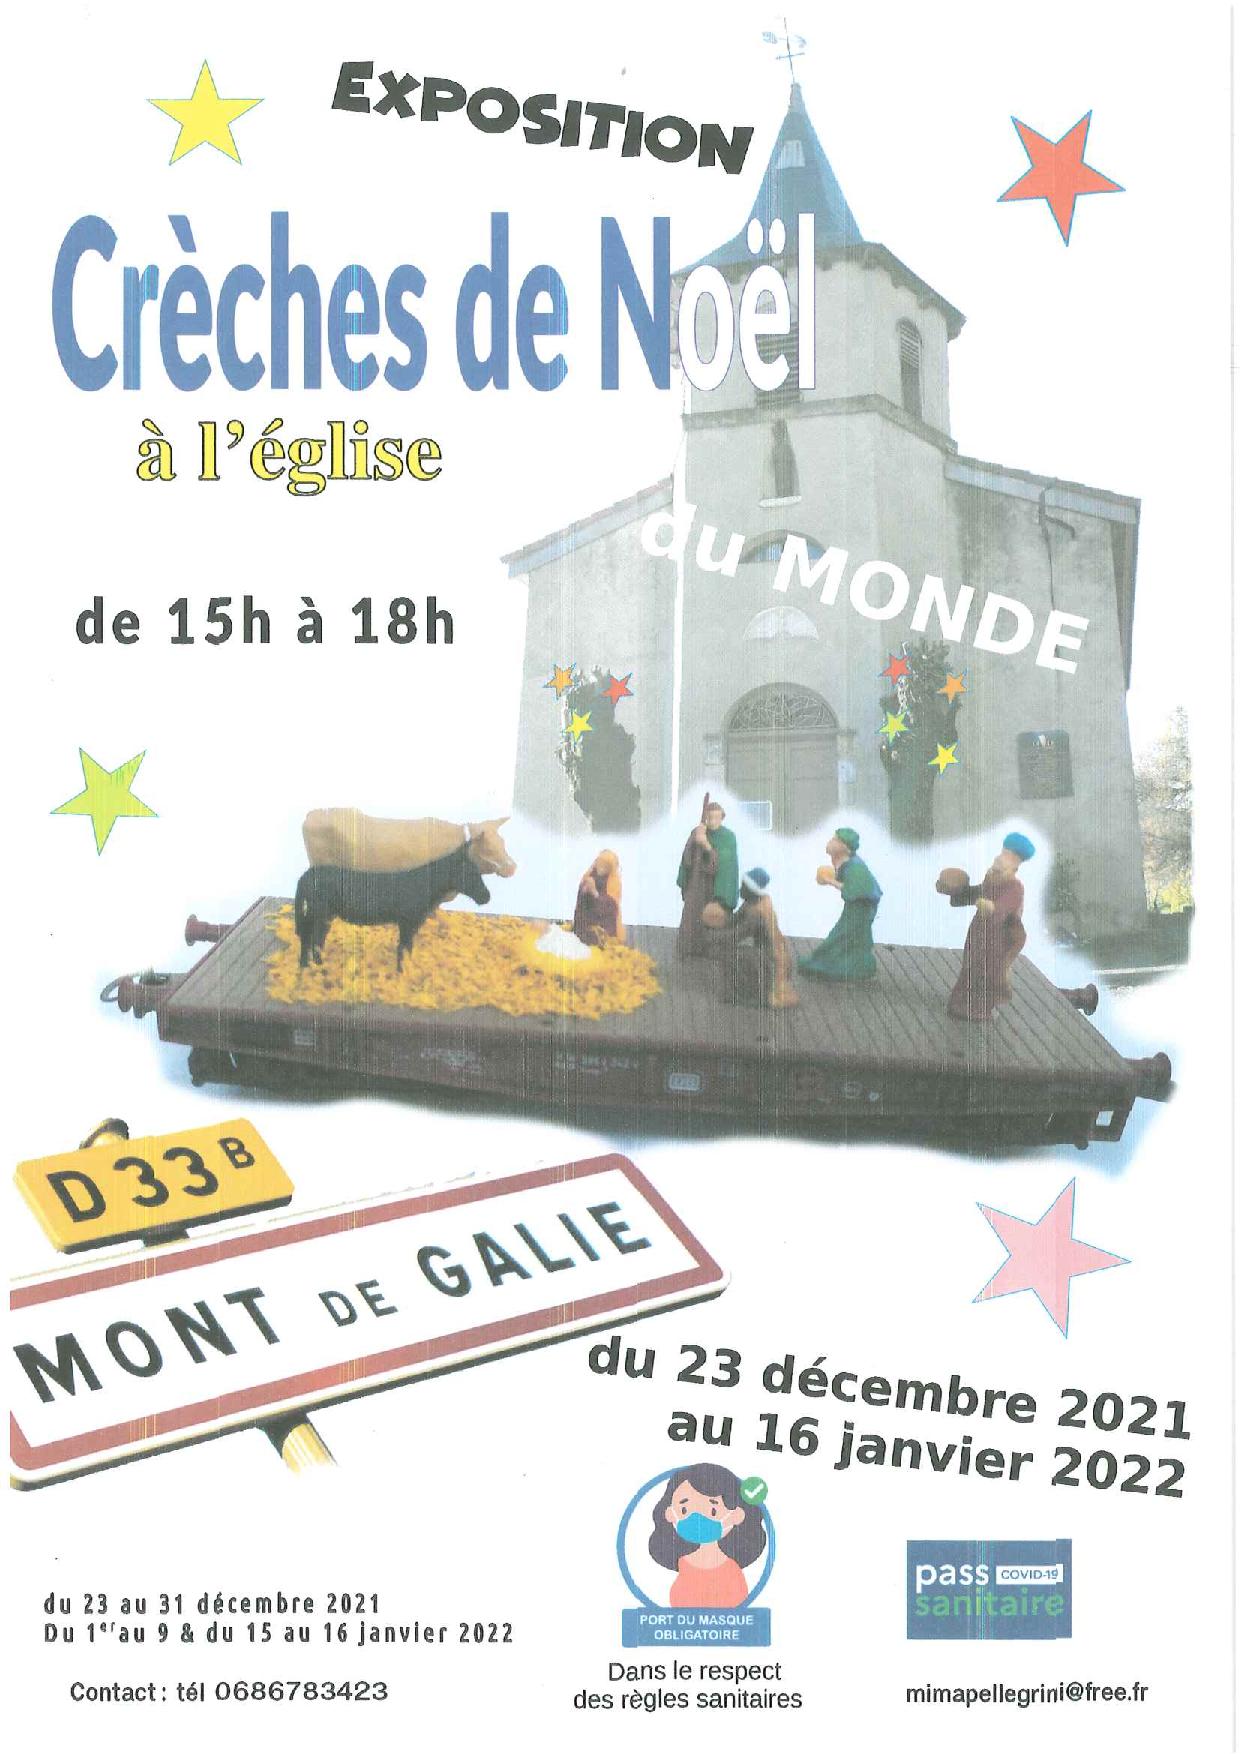 EXPOSITION CRECHES DE NOEL DU MONDE ENTIER